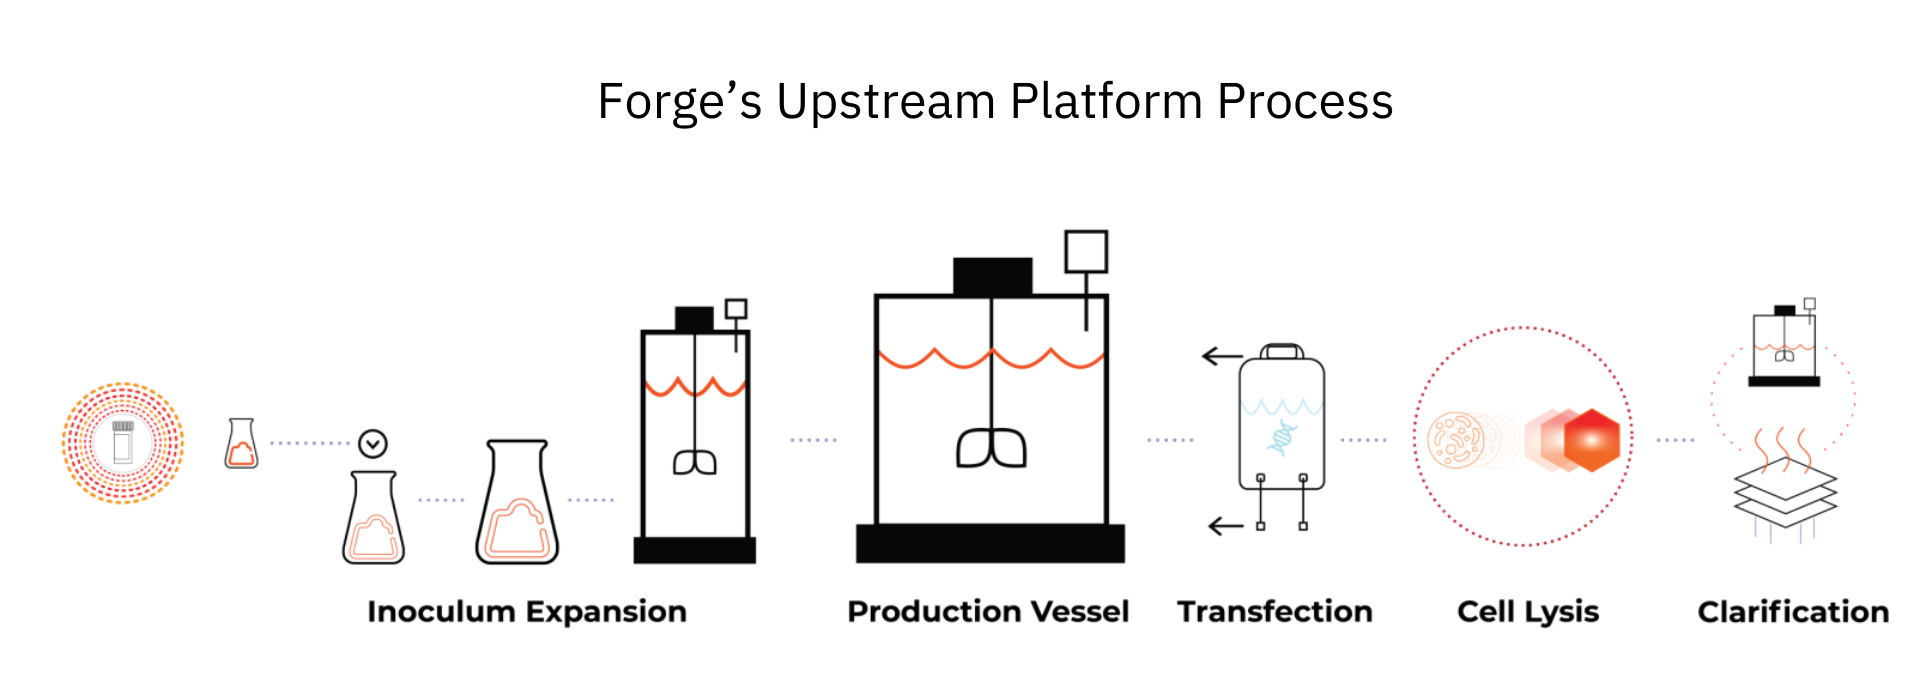 Forge’s Upstream Platform Process